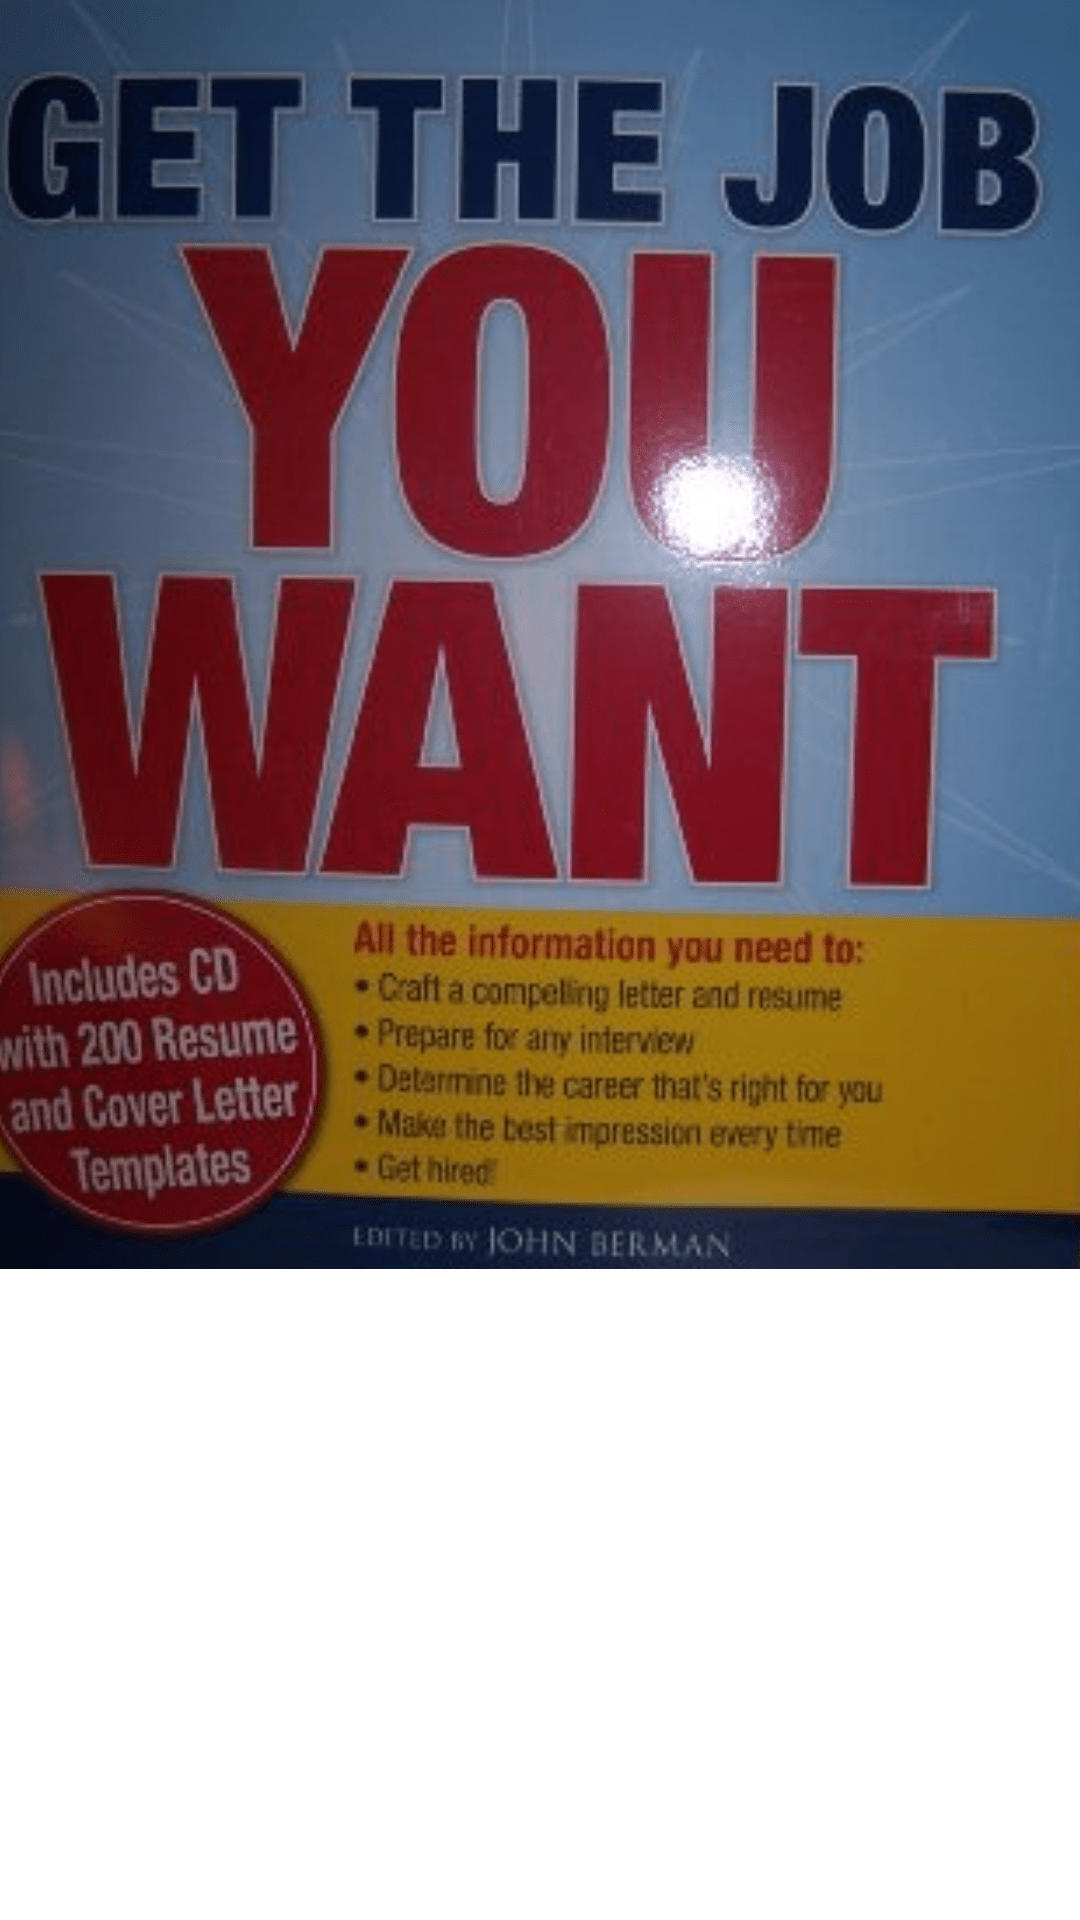 Get the Job You Want by John Berman